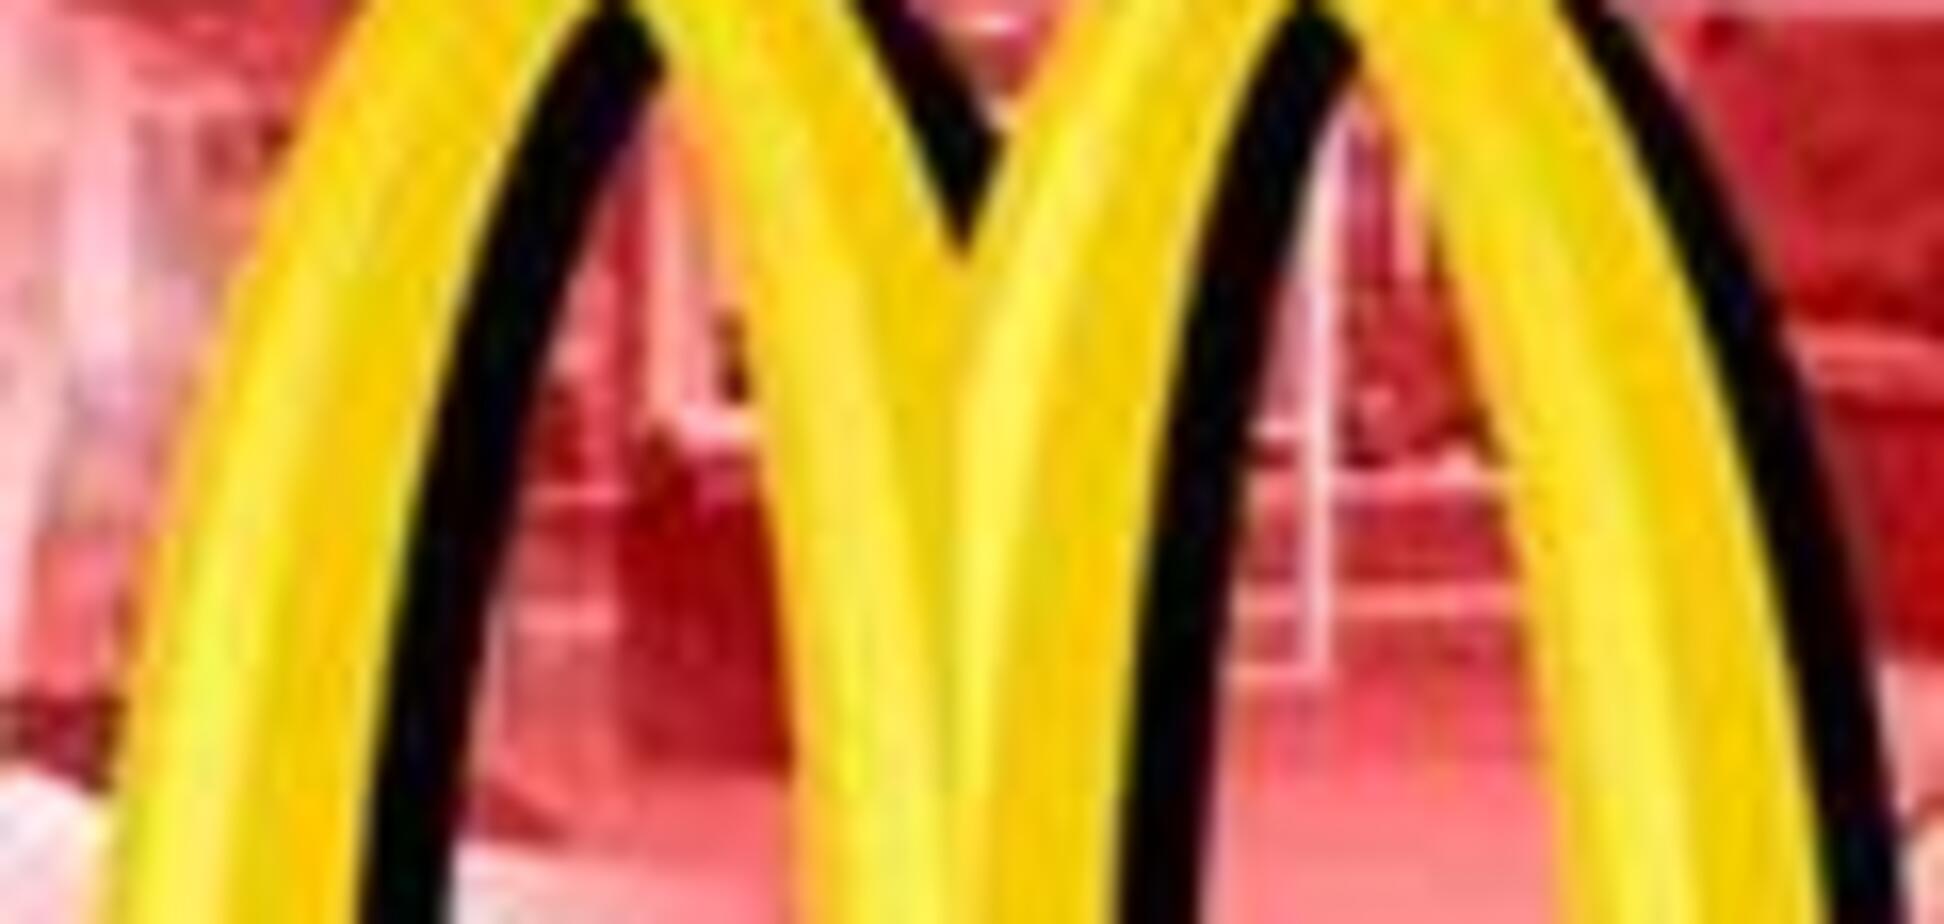 Величезна вивіска McDonald's звалилася на людей в США